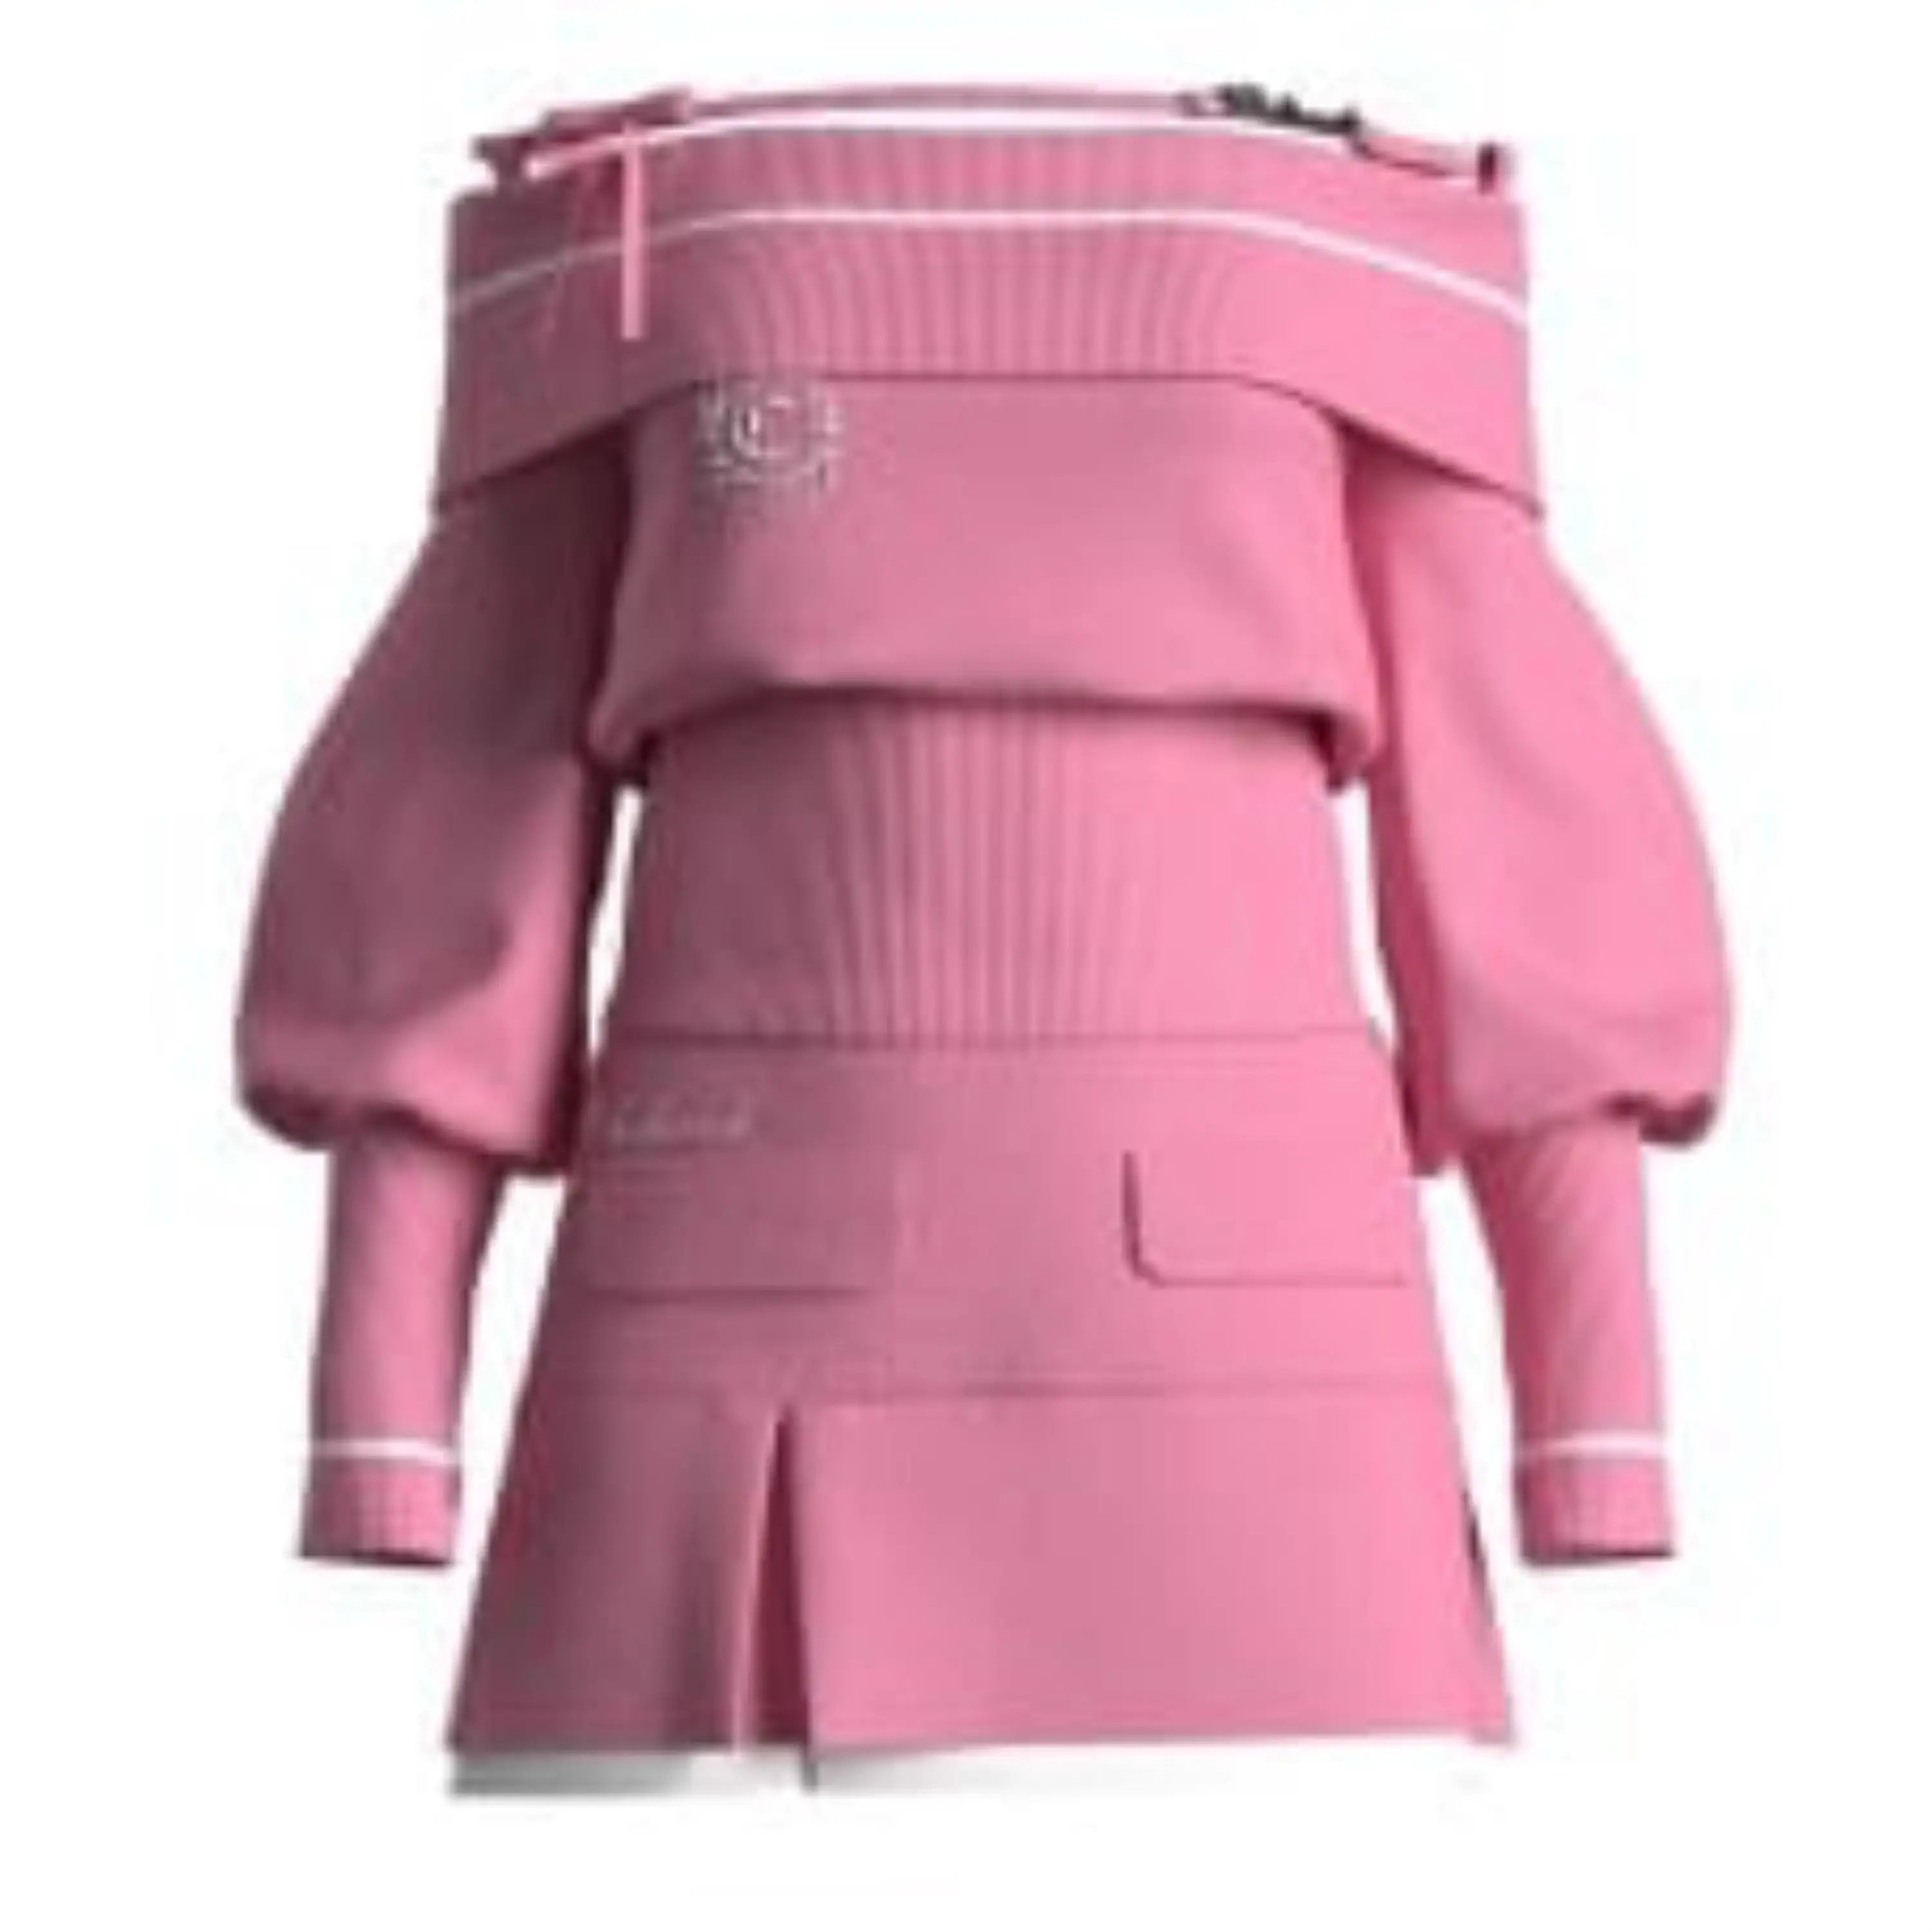 100% Whool & Jersey kain rajutan wanita kompresi bergaris rok Pink ringan pinggang tinggi dengan atasan & rok